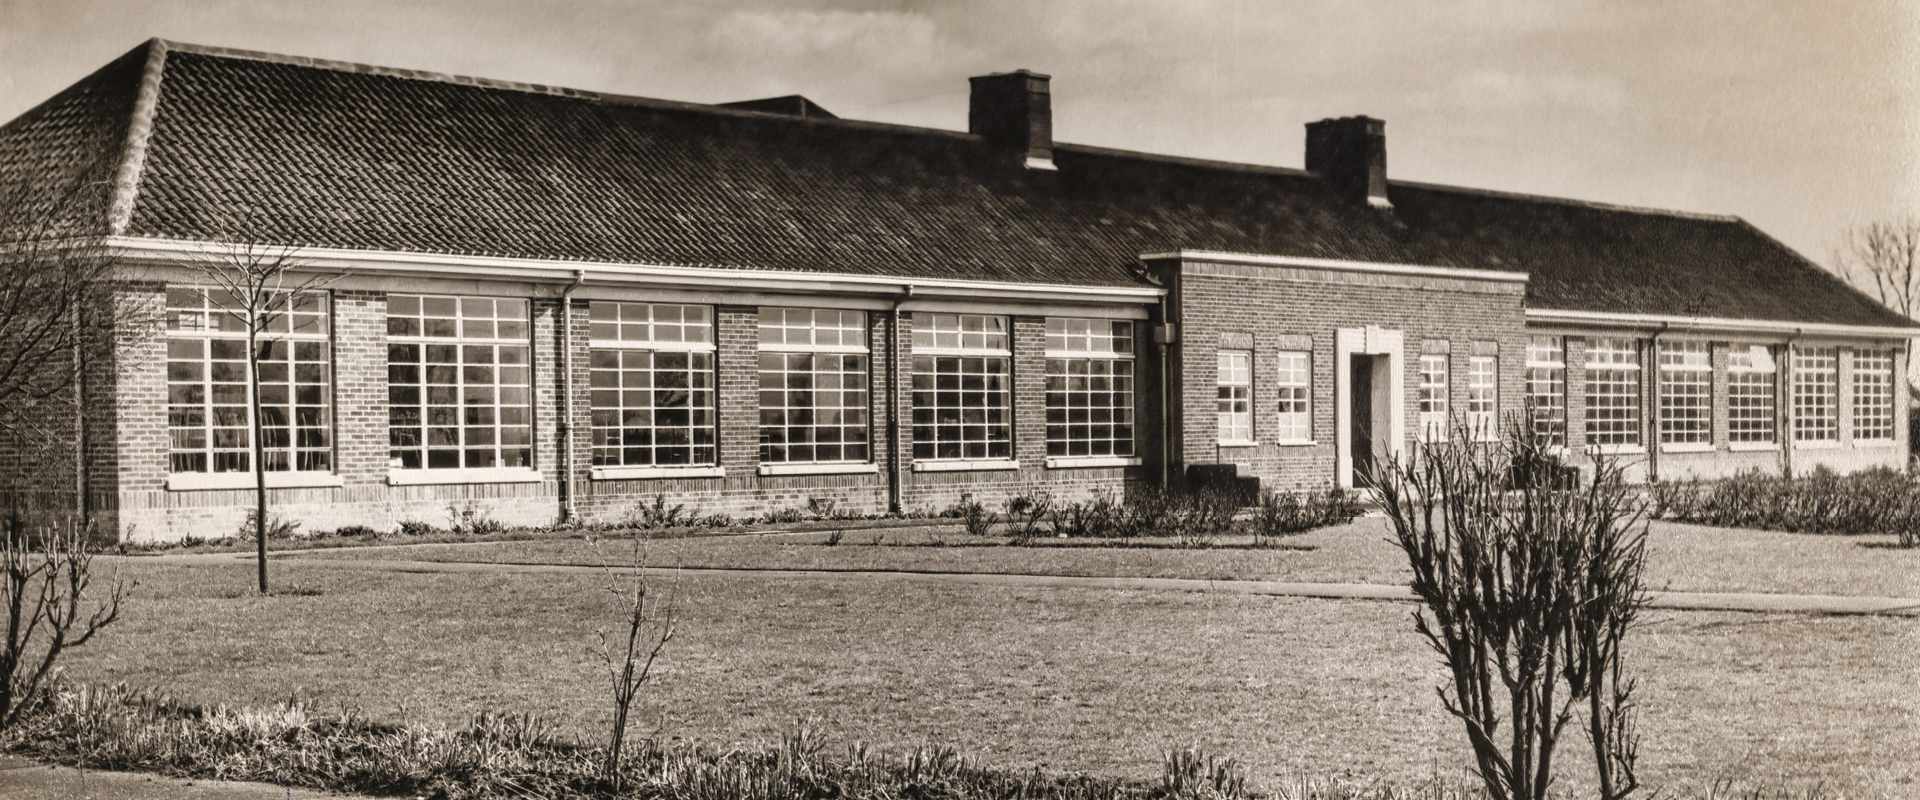 Thomas Mills High School History in 1930s